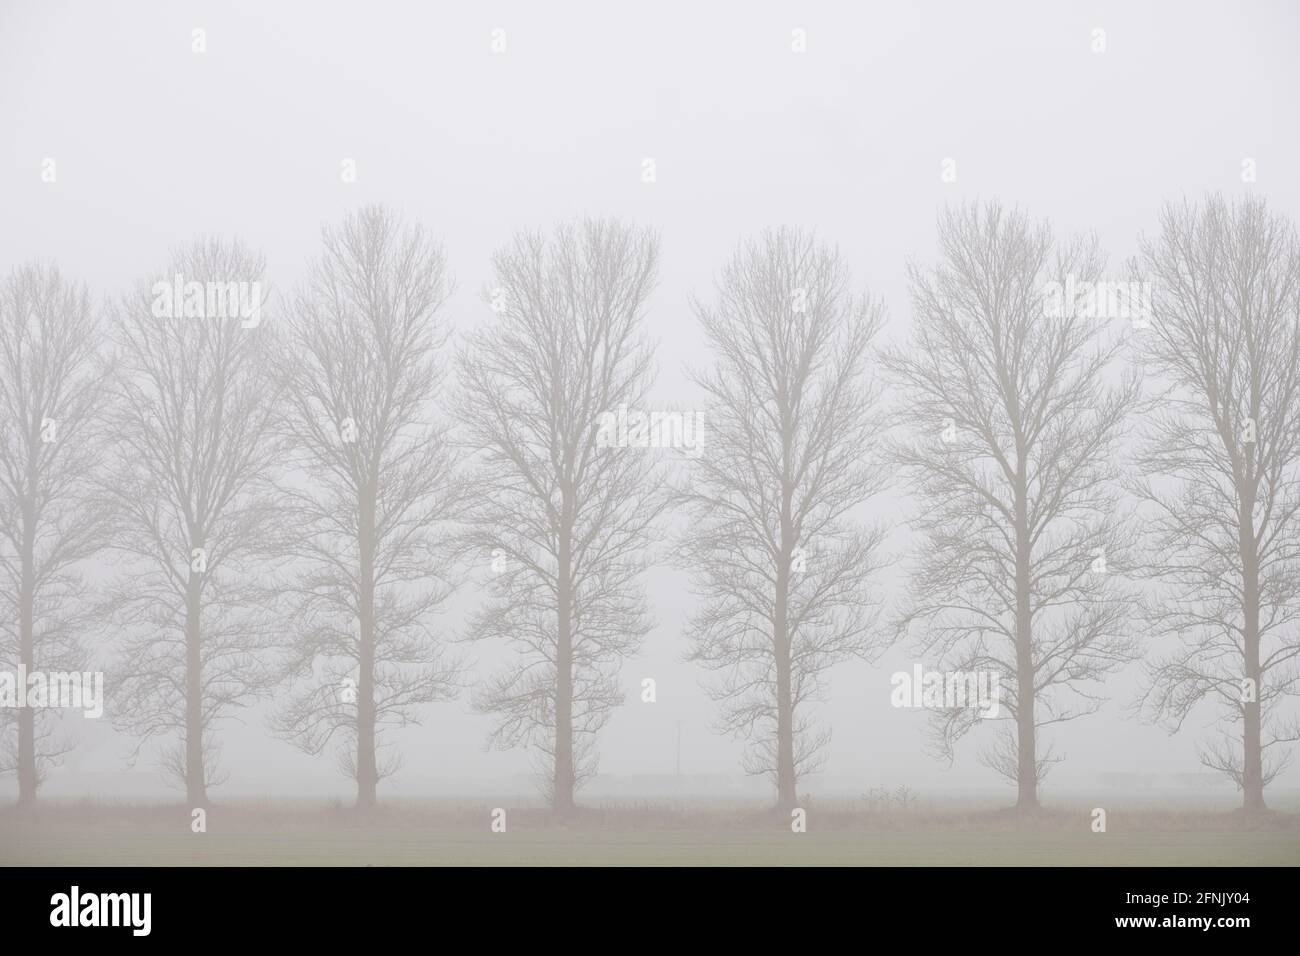 Row of trees in mist Stock Photo